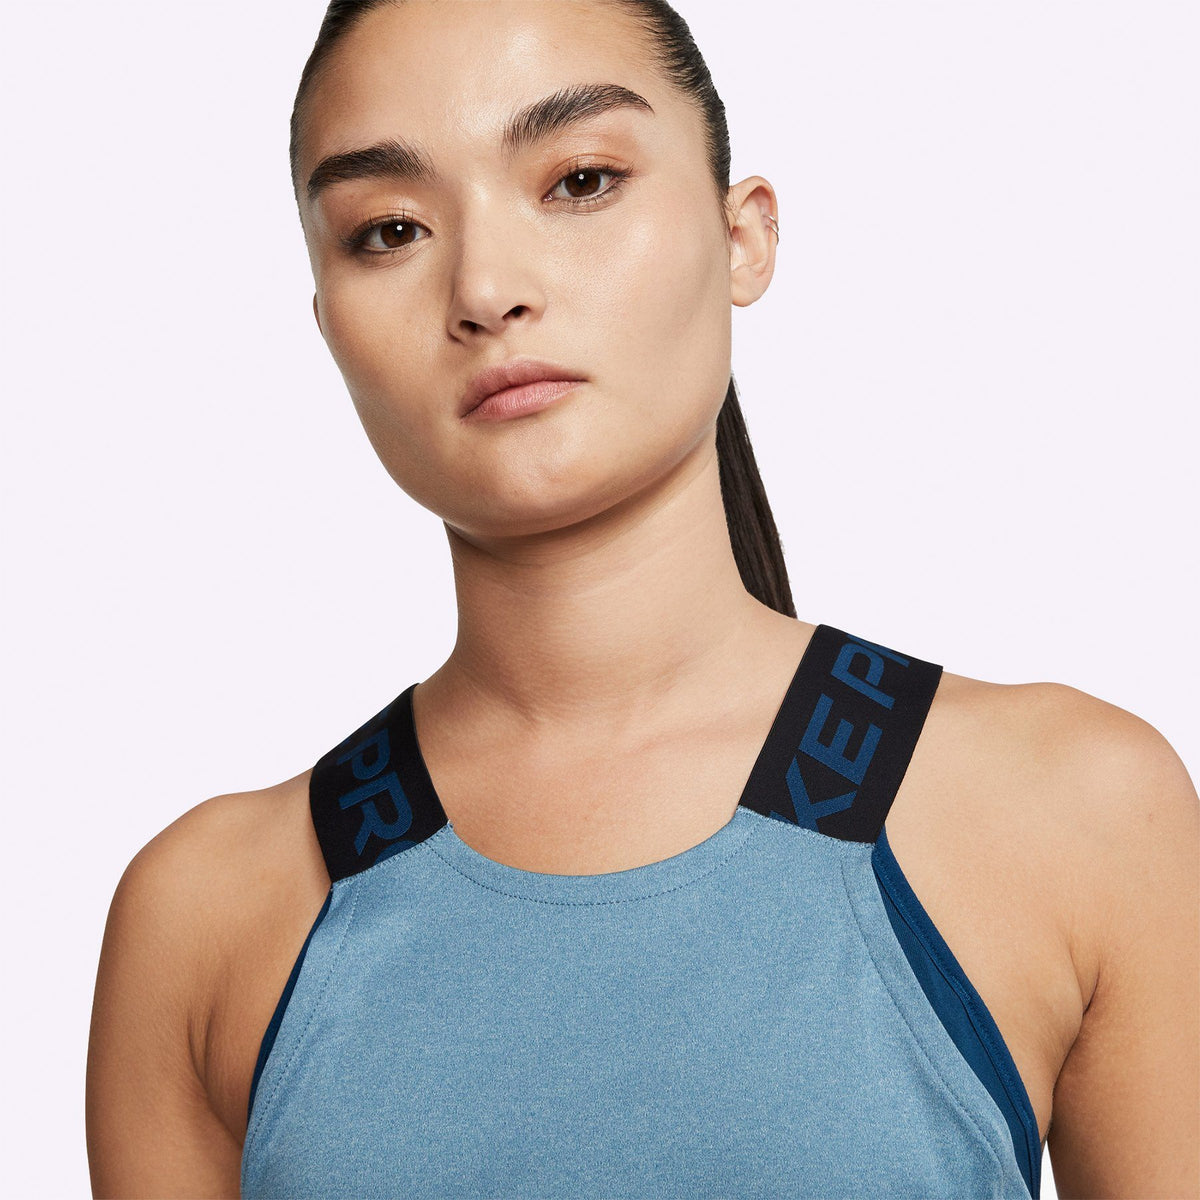 Nike Women's XL Cool Training Tank Top, Blue Athletic Tank 725489-435